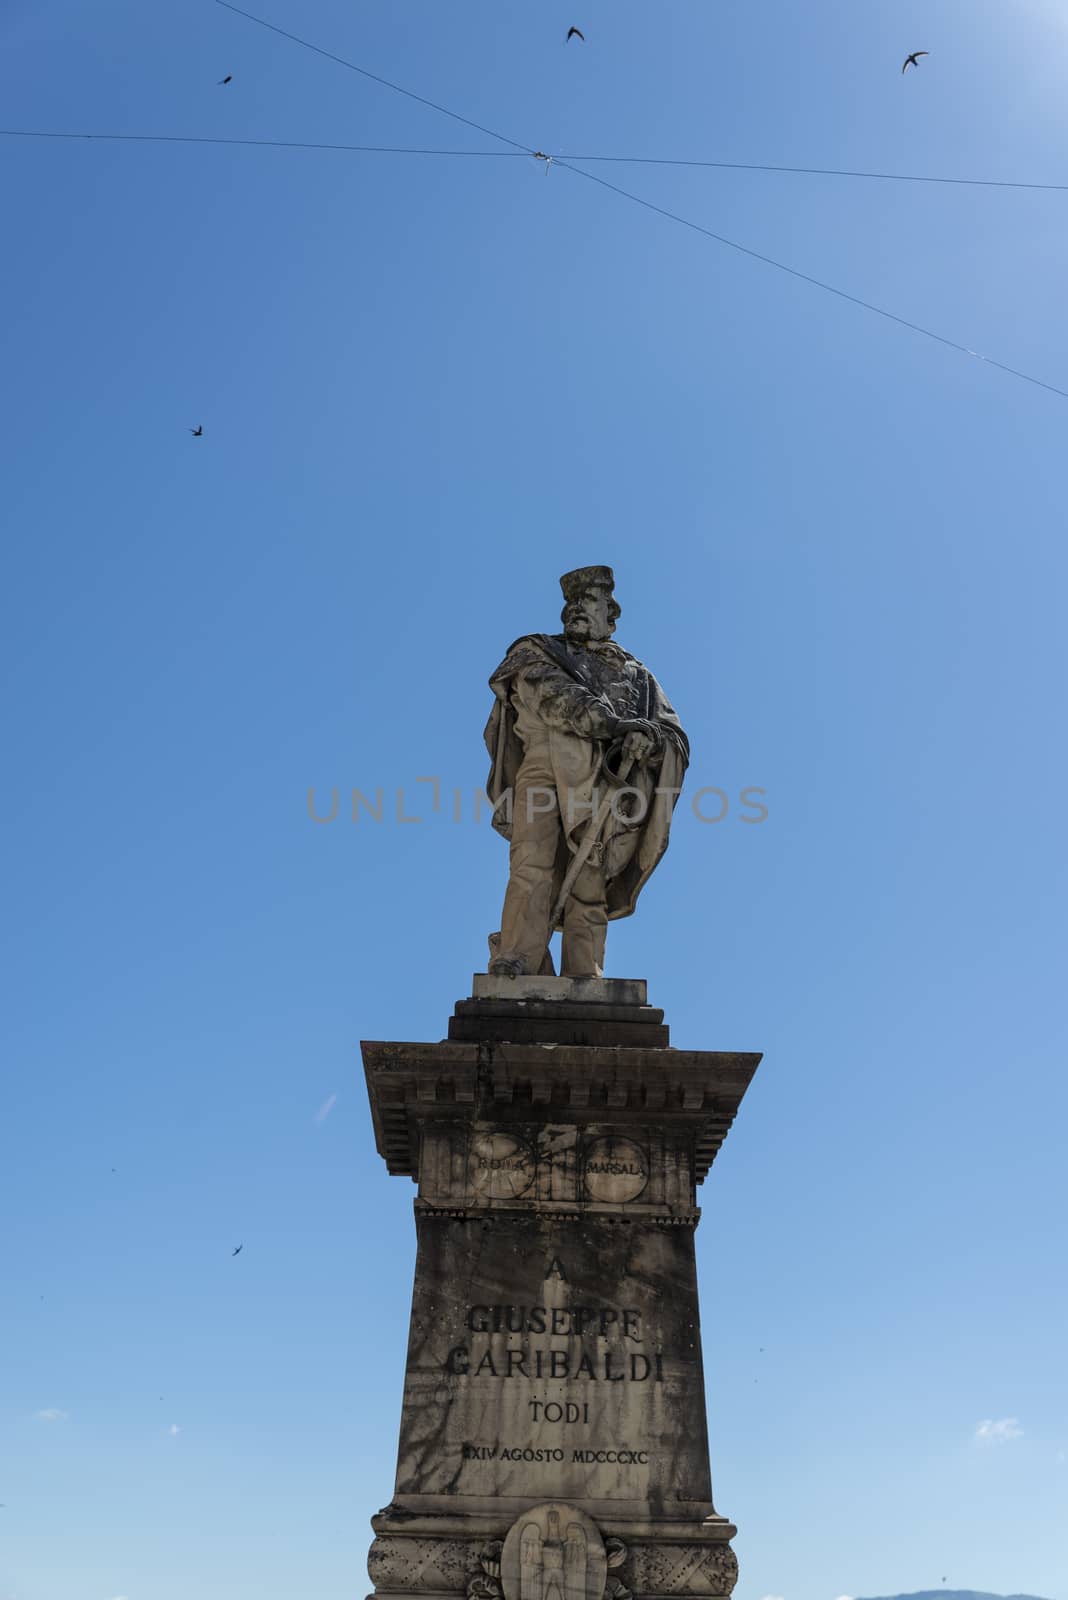 todi,italy june 20 2020 :Garibaldi monument in the center of the Garibaldi square in Todi